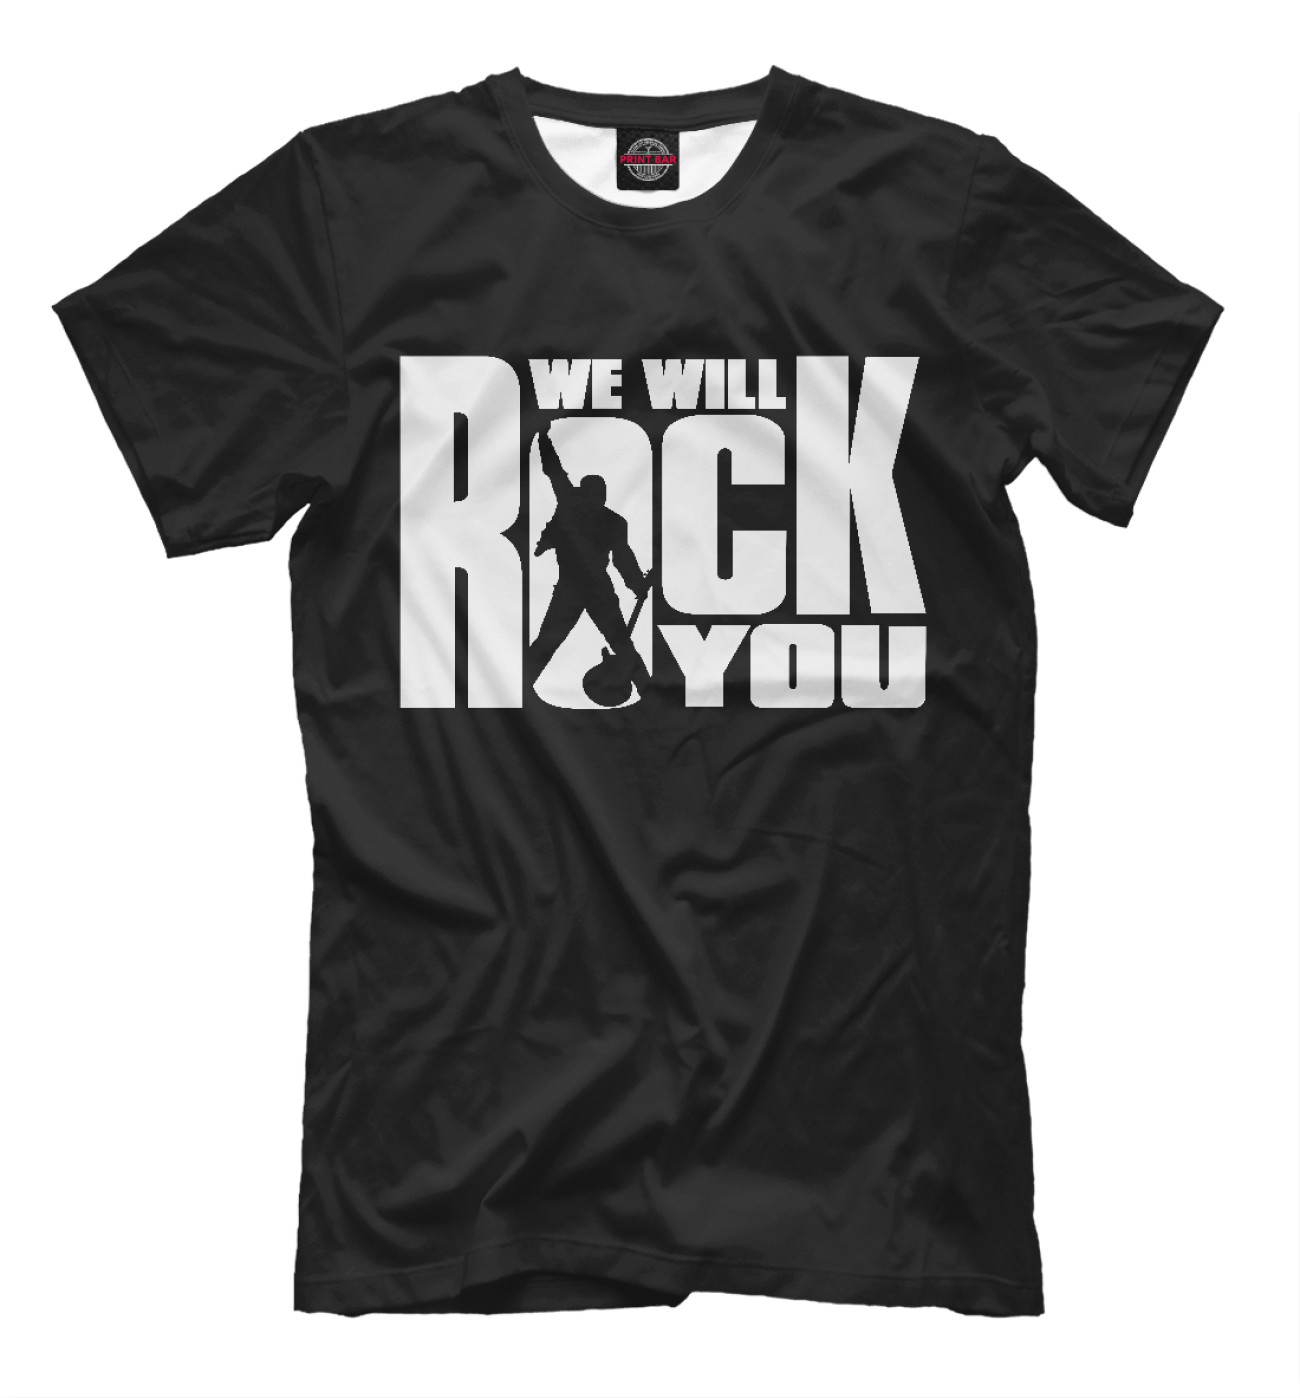 Мужская Футболка We Will Rock You, артикул: BHR-438569-fut-2